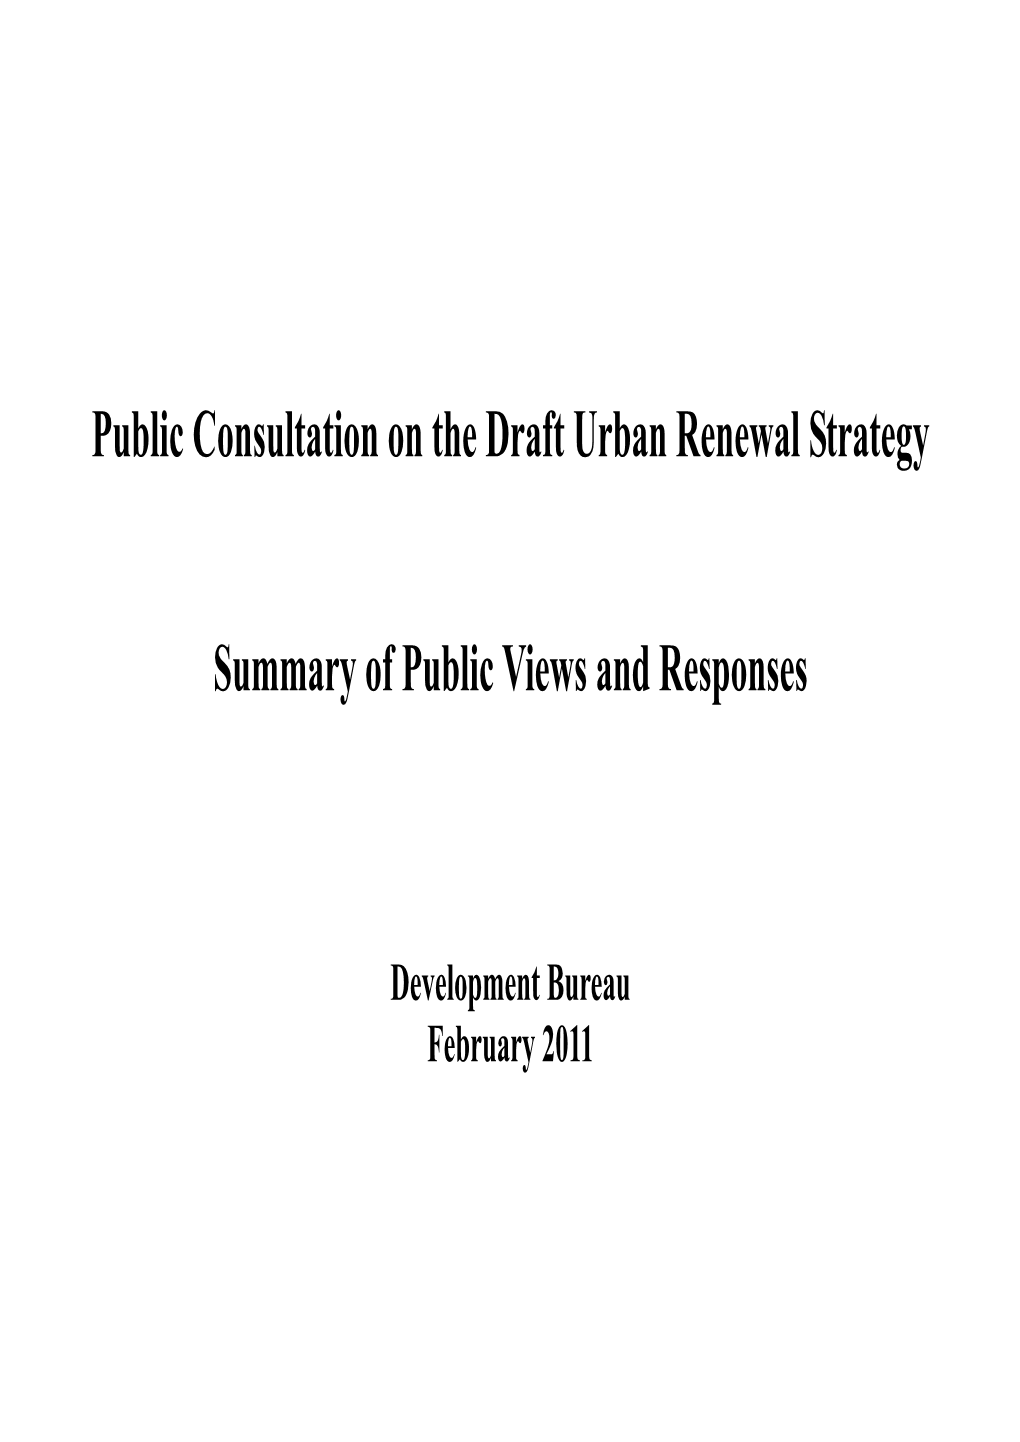 Public Consultation on the Draft Urban Renewal Strategy Summary Of